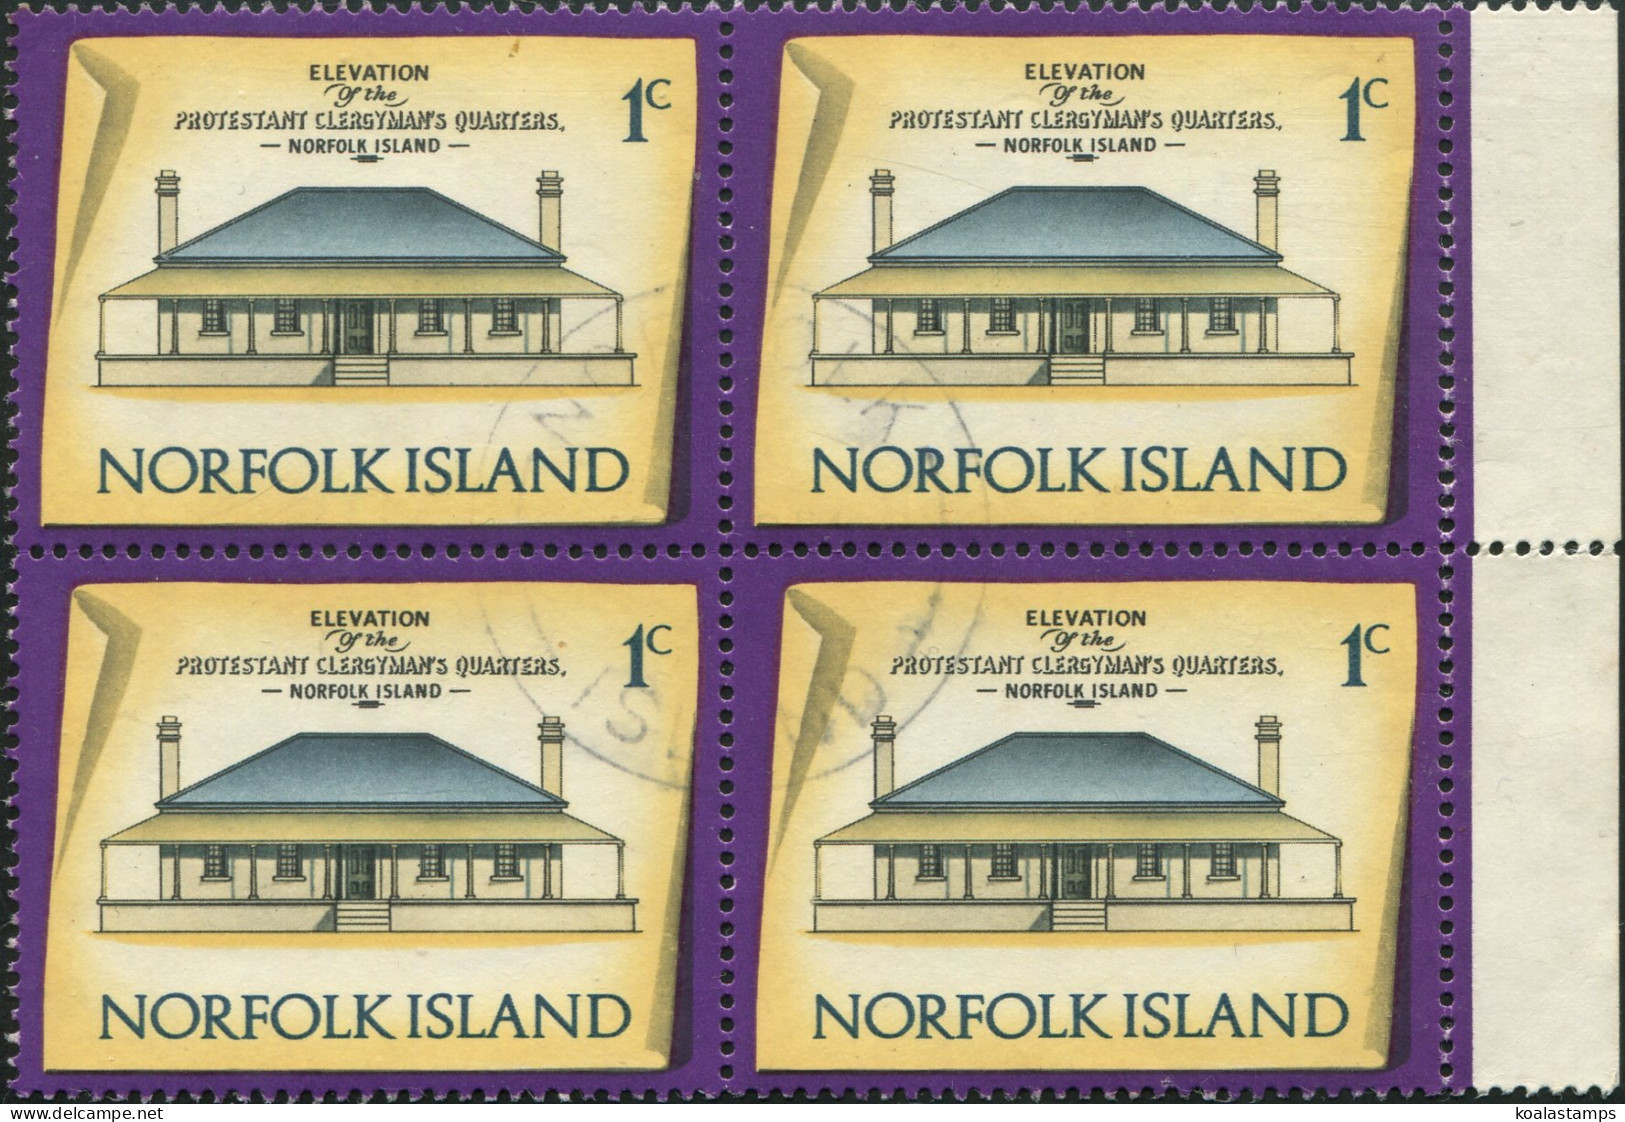 Norfolk Island 1973 SG133 1c Historic Building Block FU - Norfolk Island